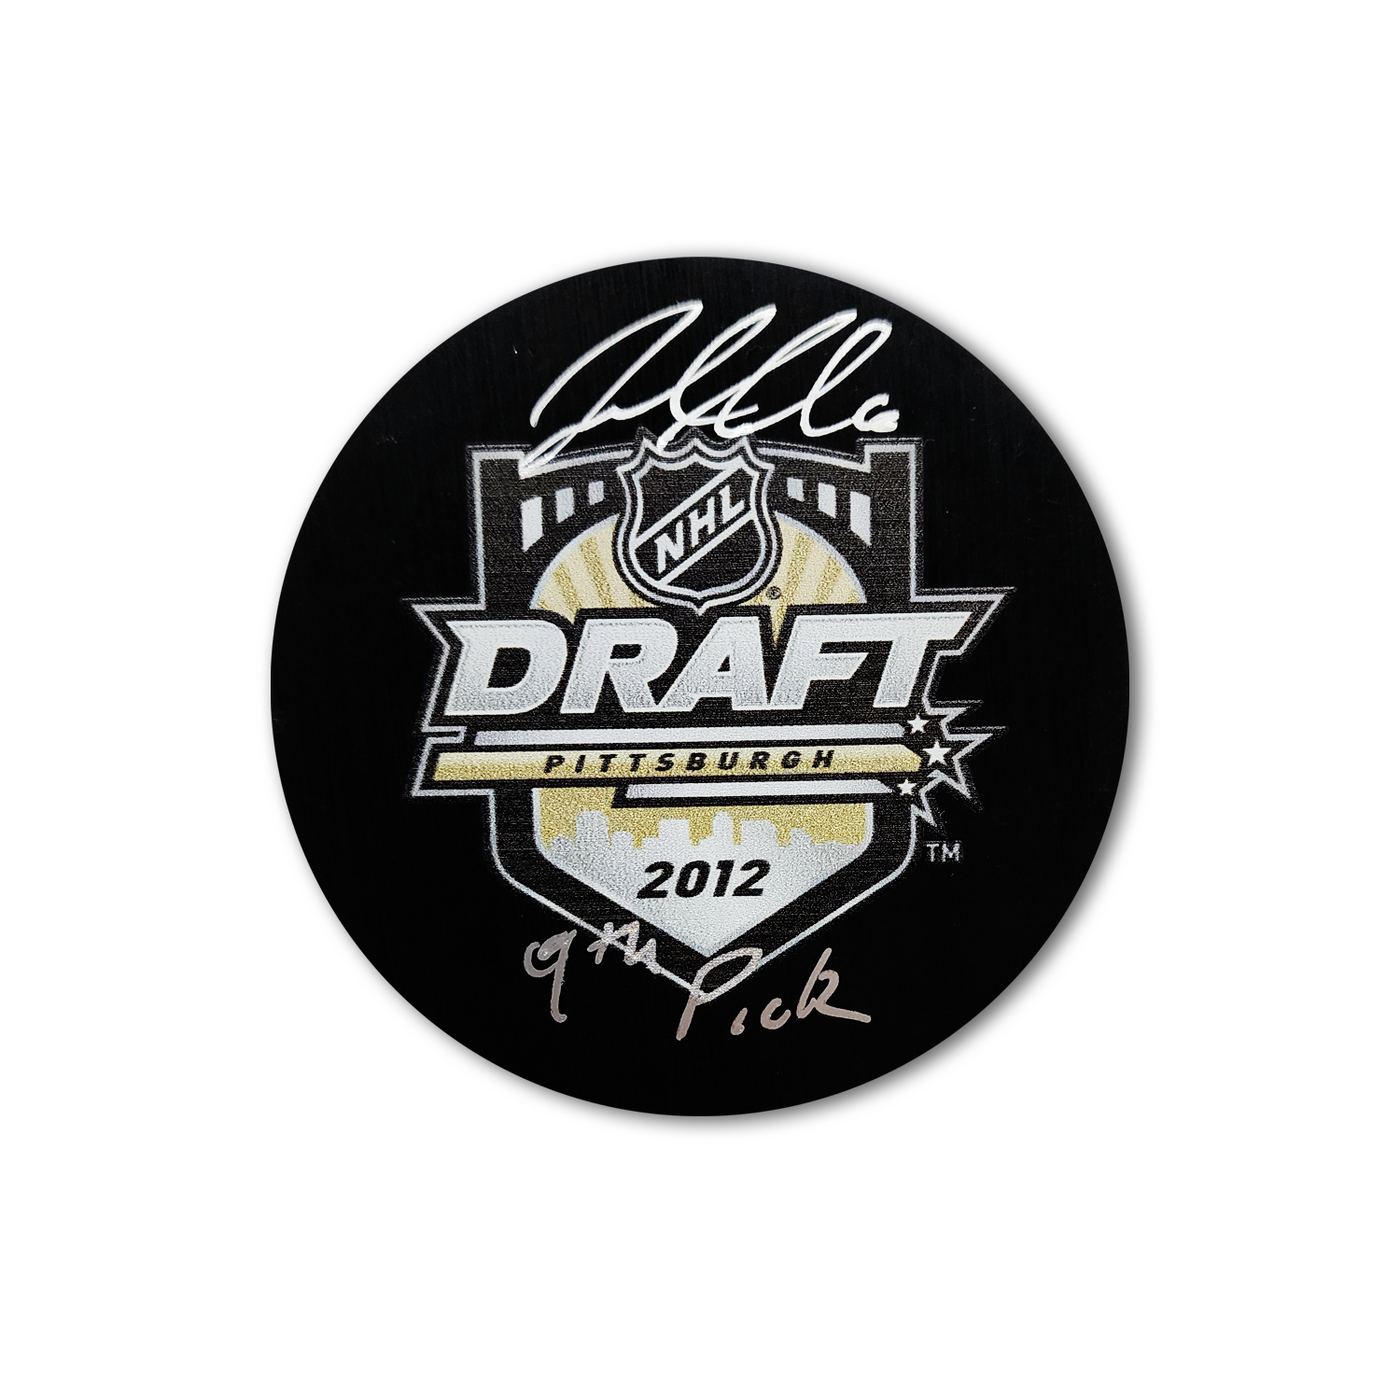 Jacob Trouba Autographed 2012 NHL Draft Hockey Puck Inscribed 9th Pick